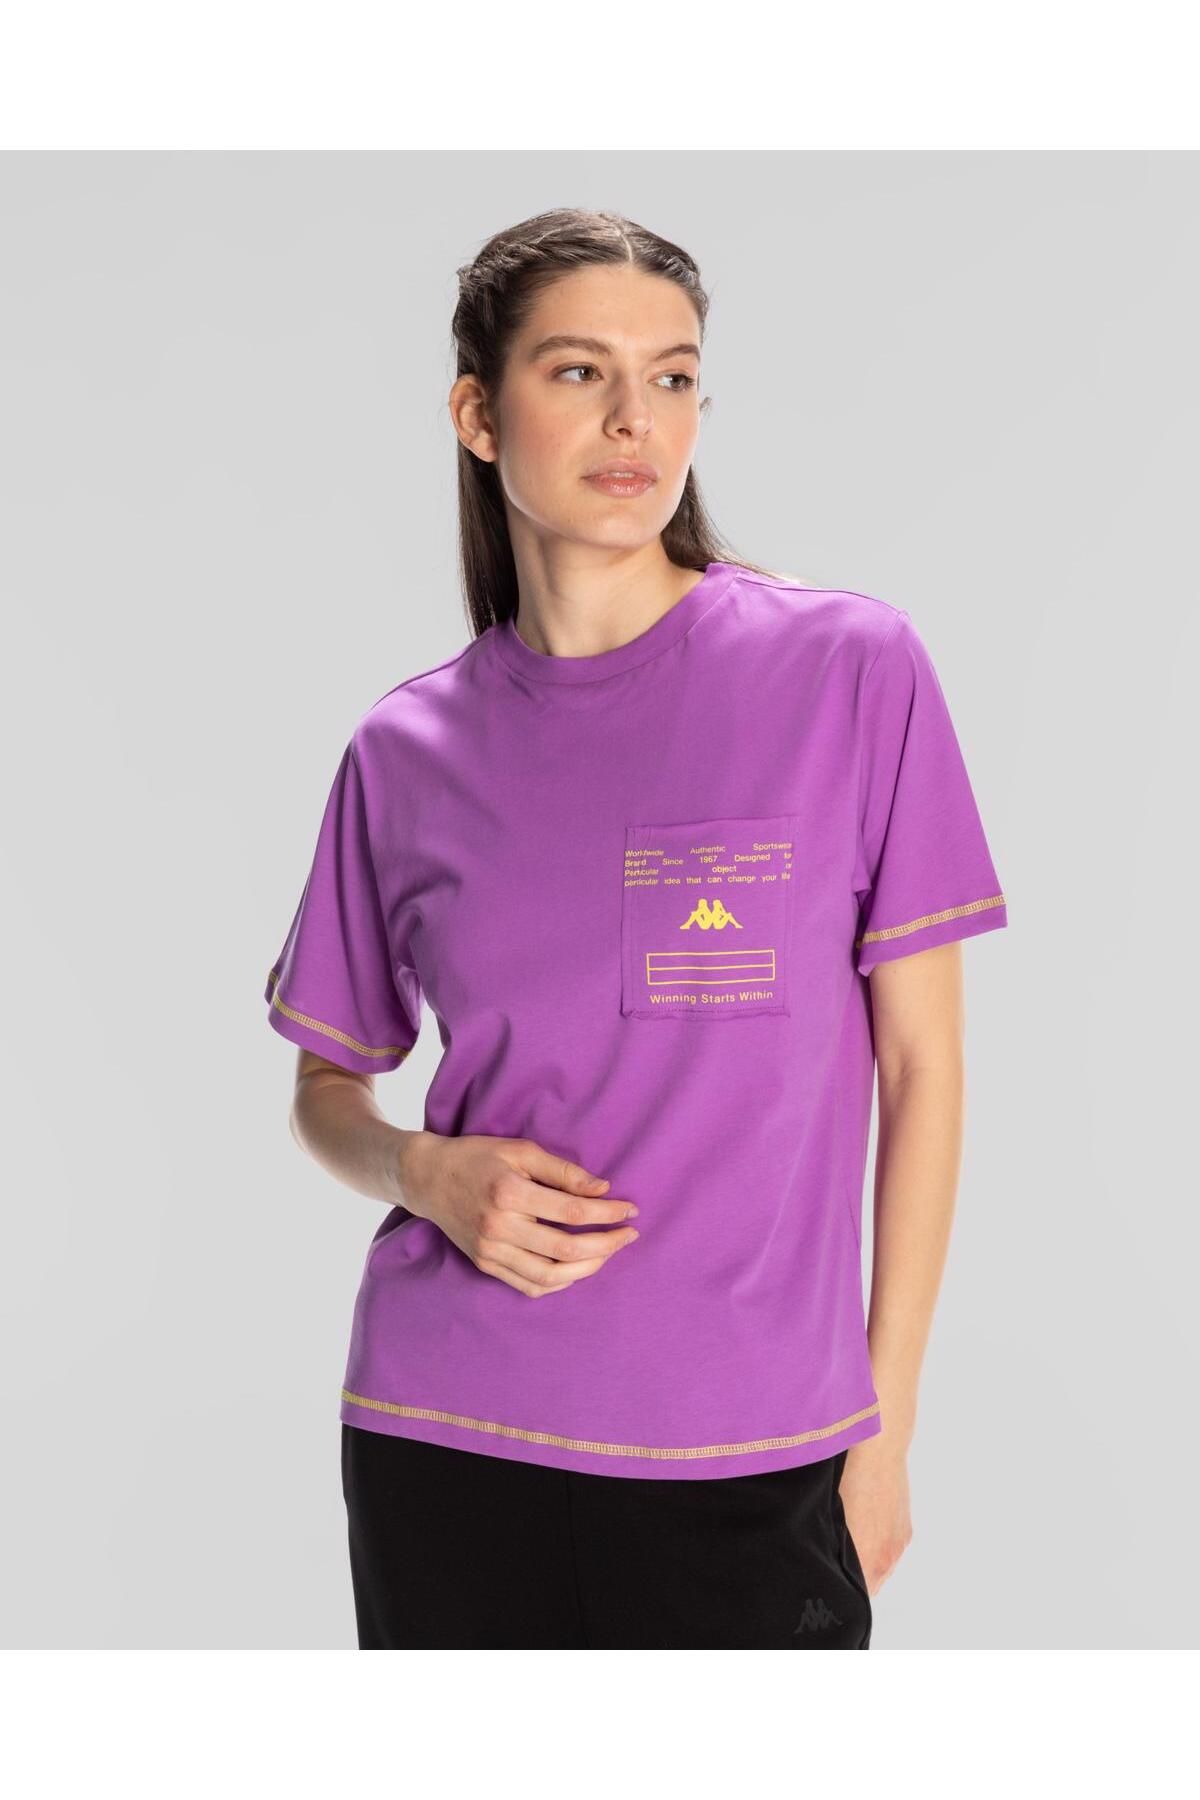 Kappa Authentic Kage T-shirt Kadın Mor Regular Fit Tişört